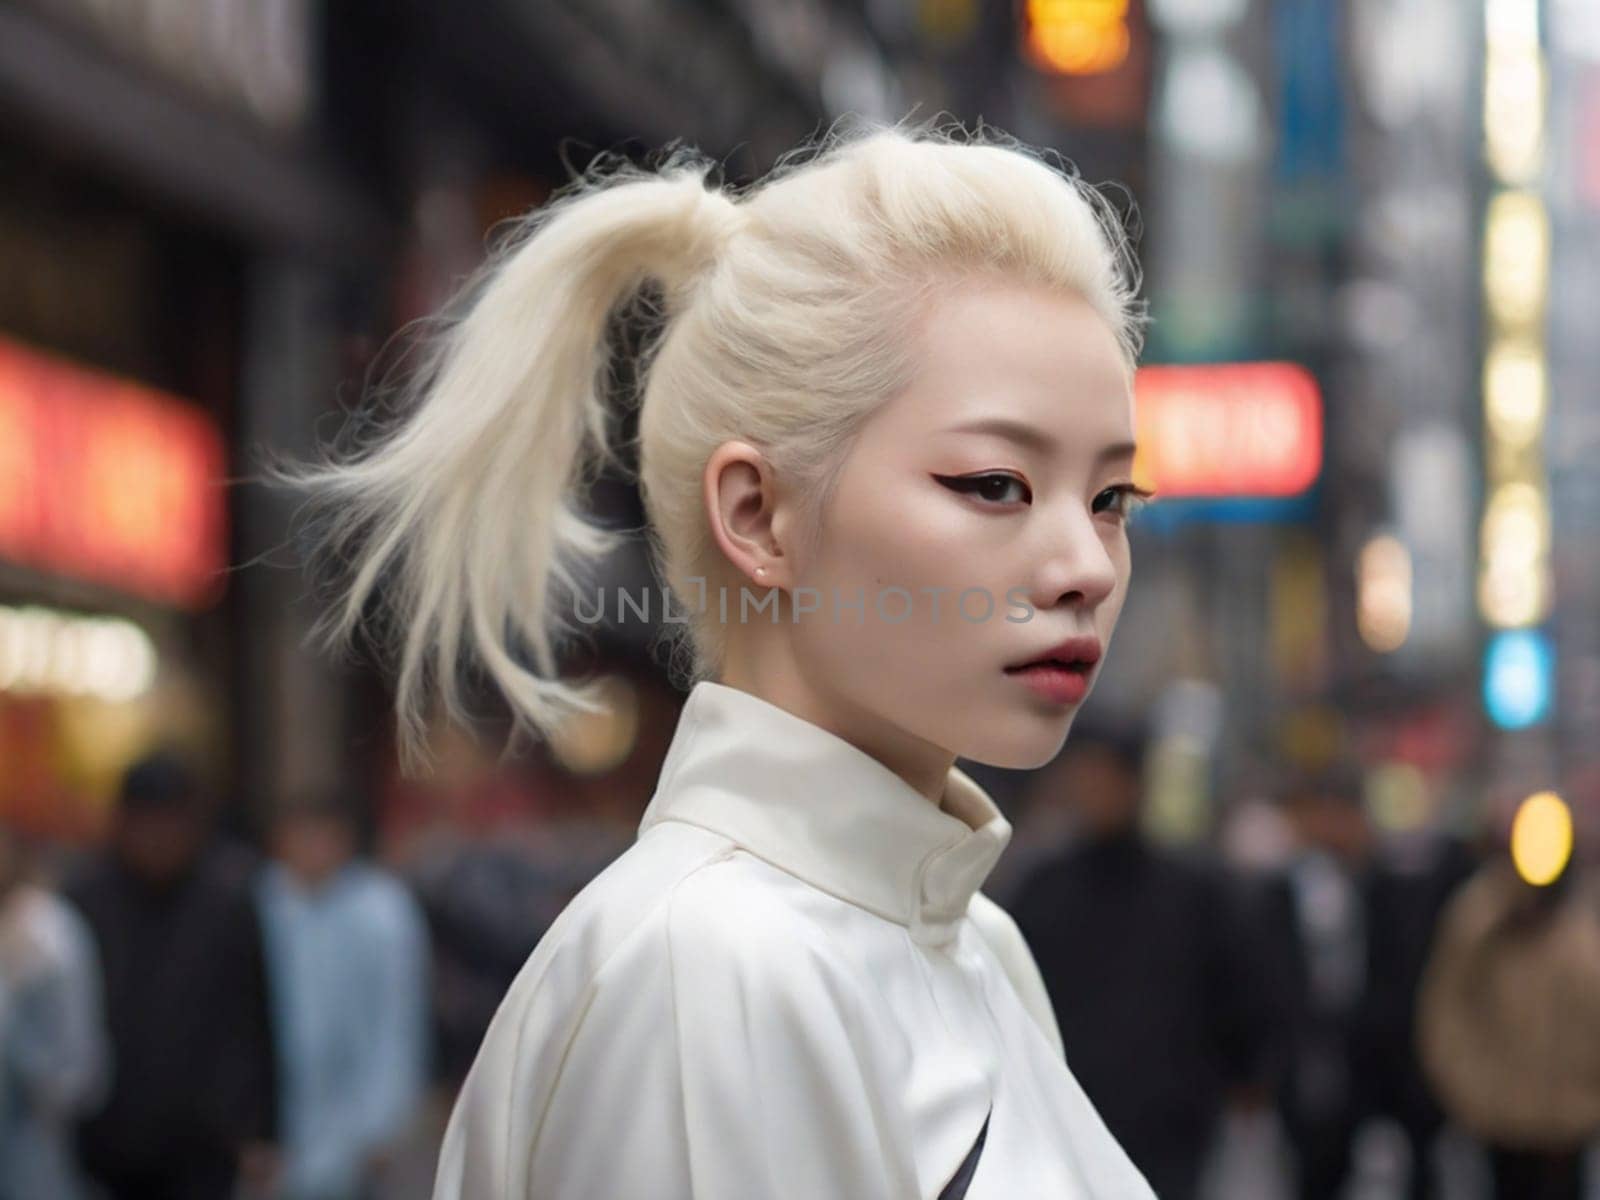 an albino girl of Asian appearance walks along the noisy streets of a noisy metropolis.